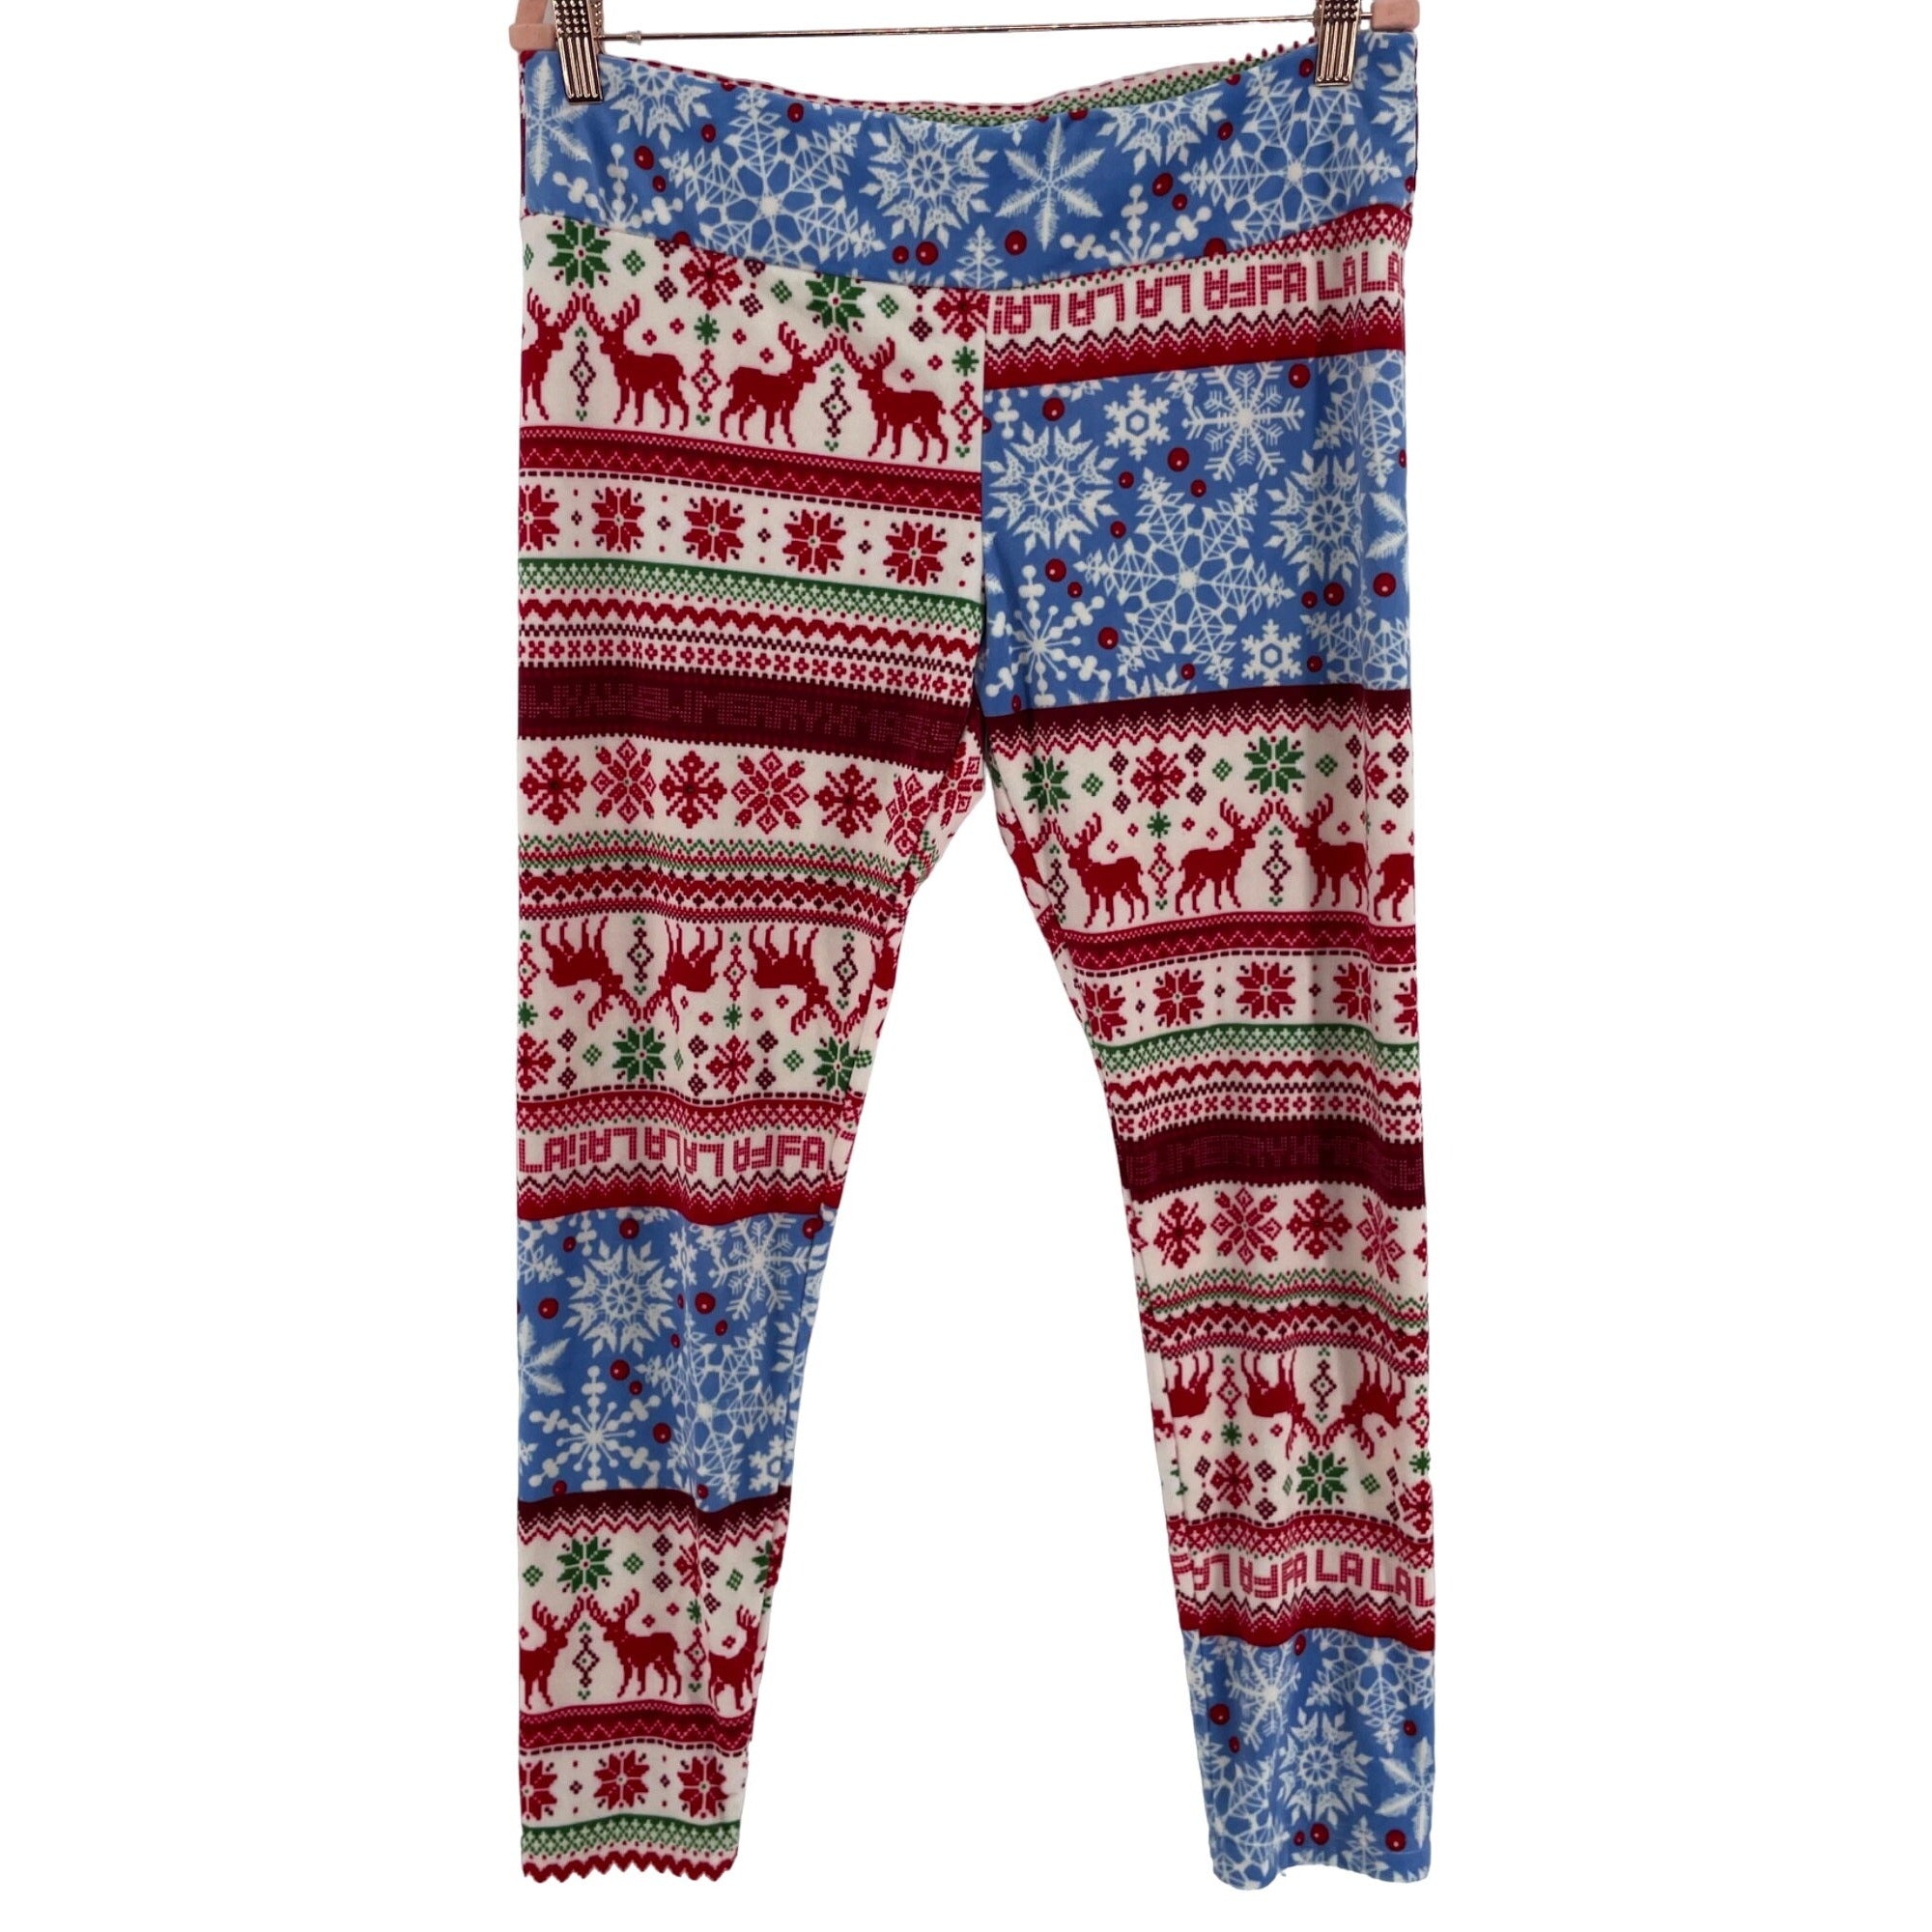 No Boundaries Women's Size XXL (19) Plush Christmas-Themed Pajama Pants